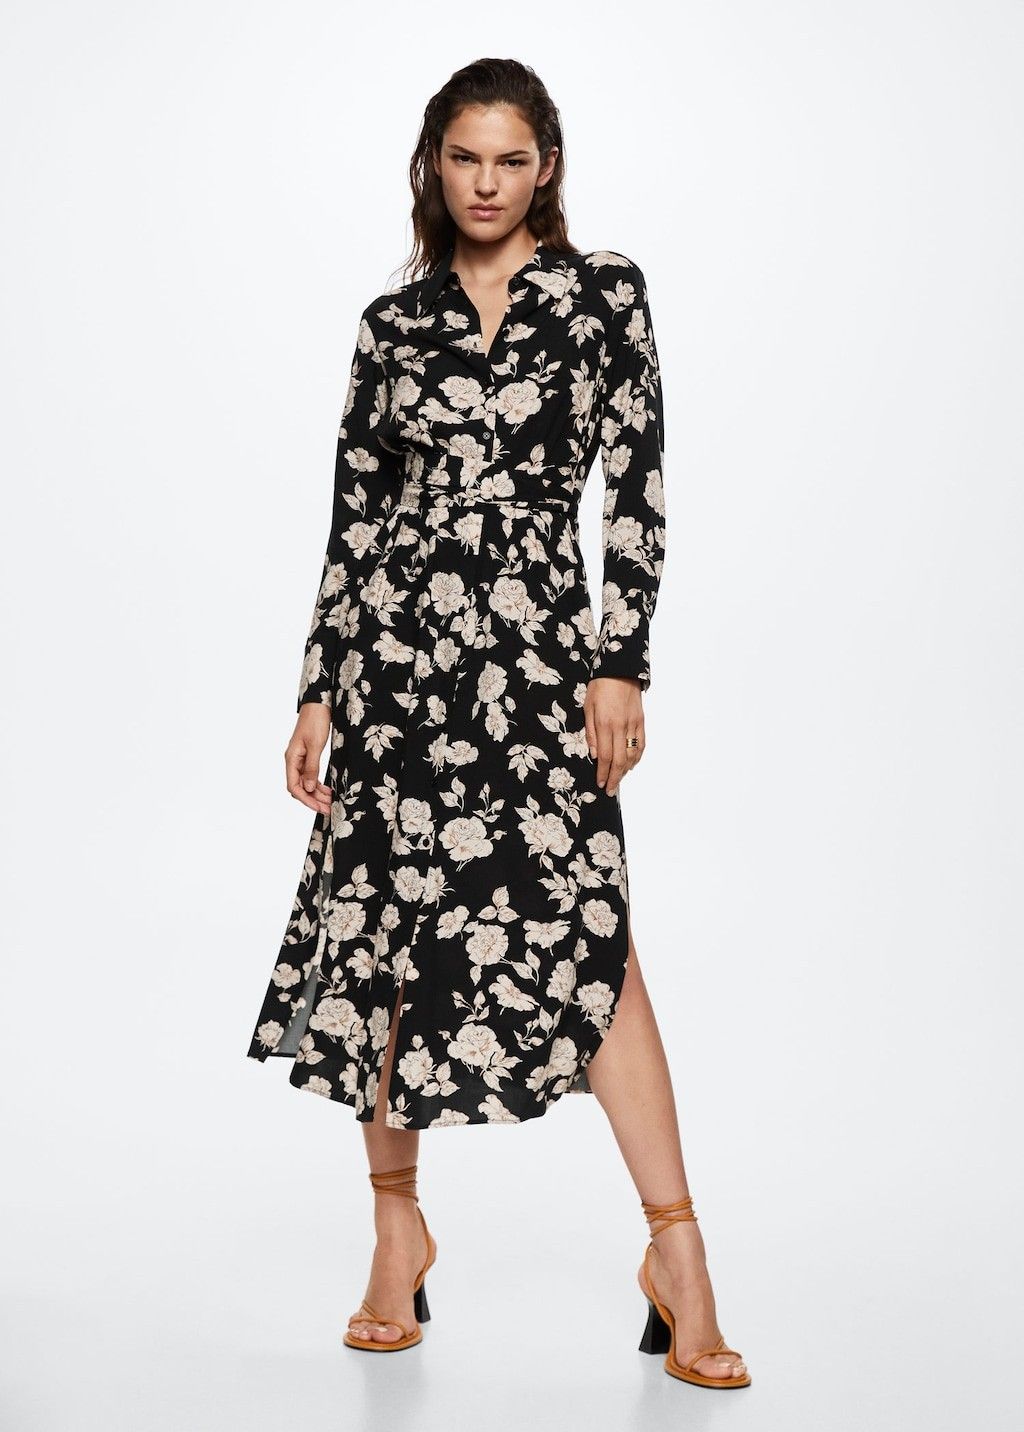 Printed shirt dress Black Dress Dresses Floral Dress Dresses Summer Dress Outfits Business Casual | MANGO (US)